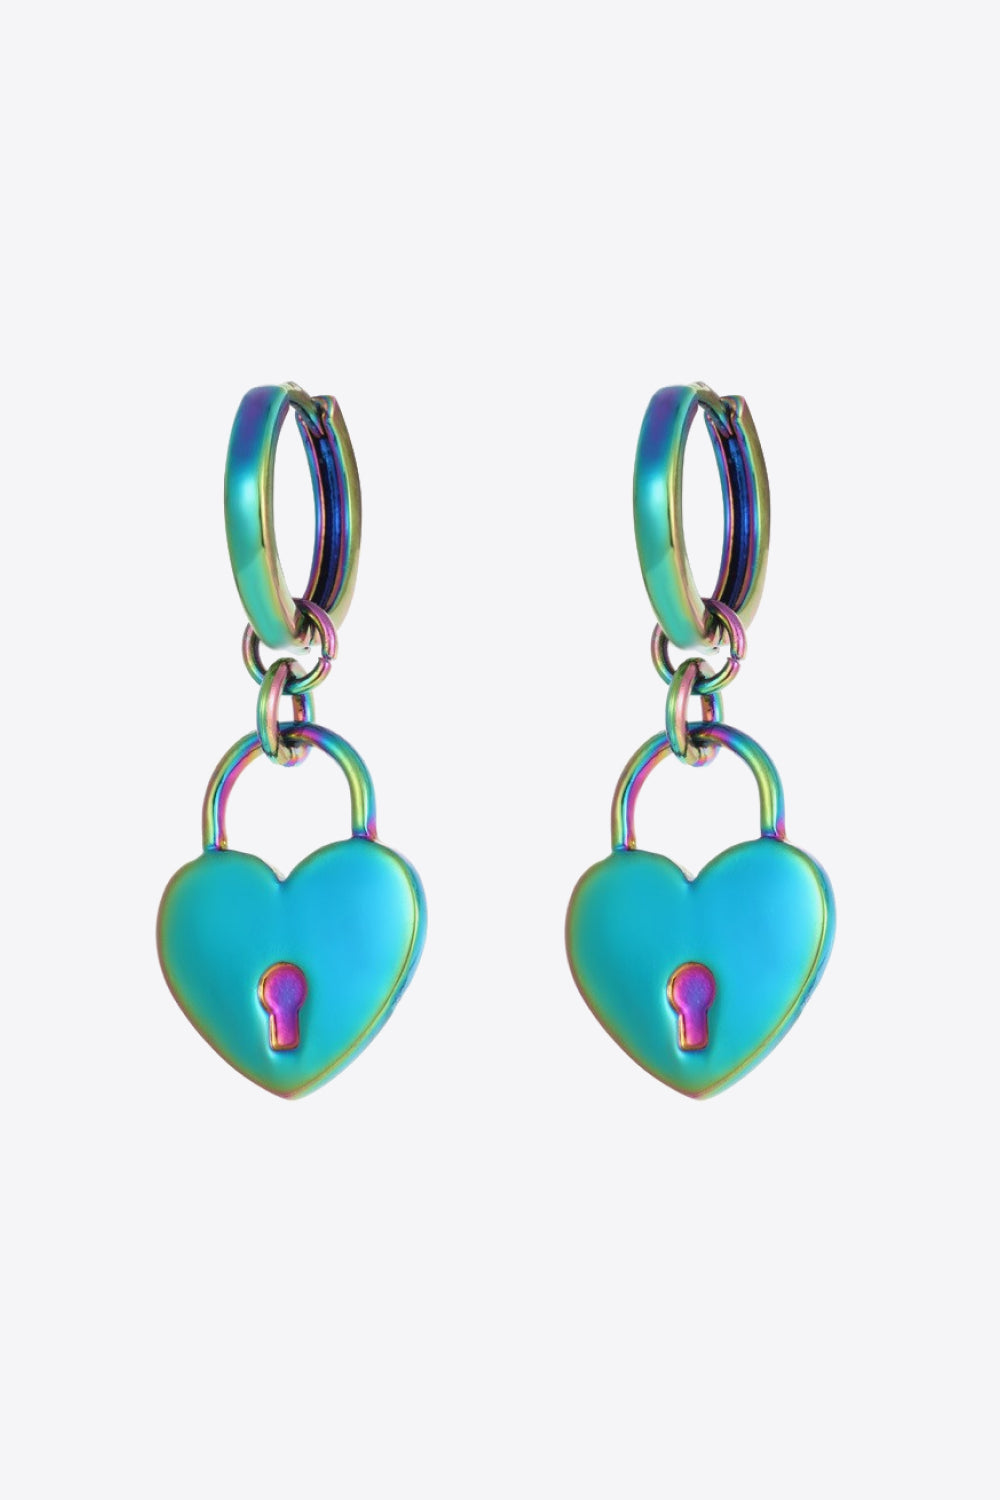 5-Pair Wholesale Multicolored Heart Drop Earrings - Ryzela